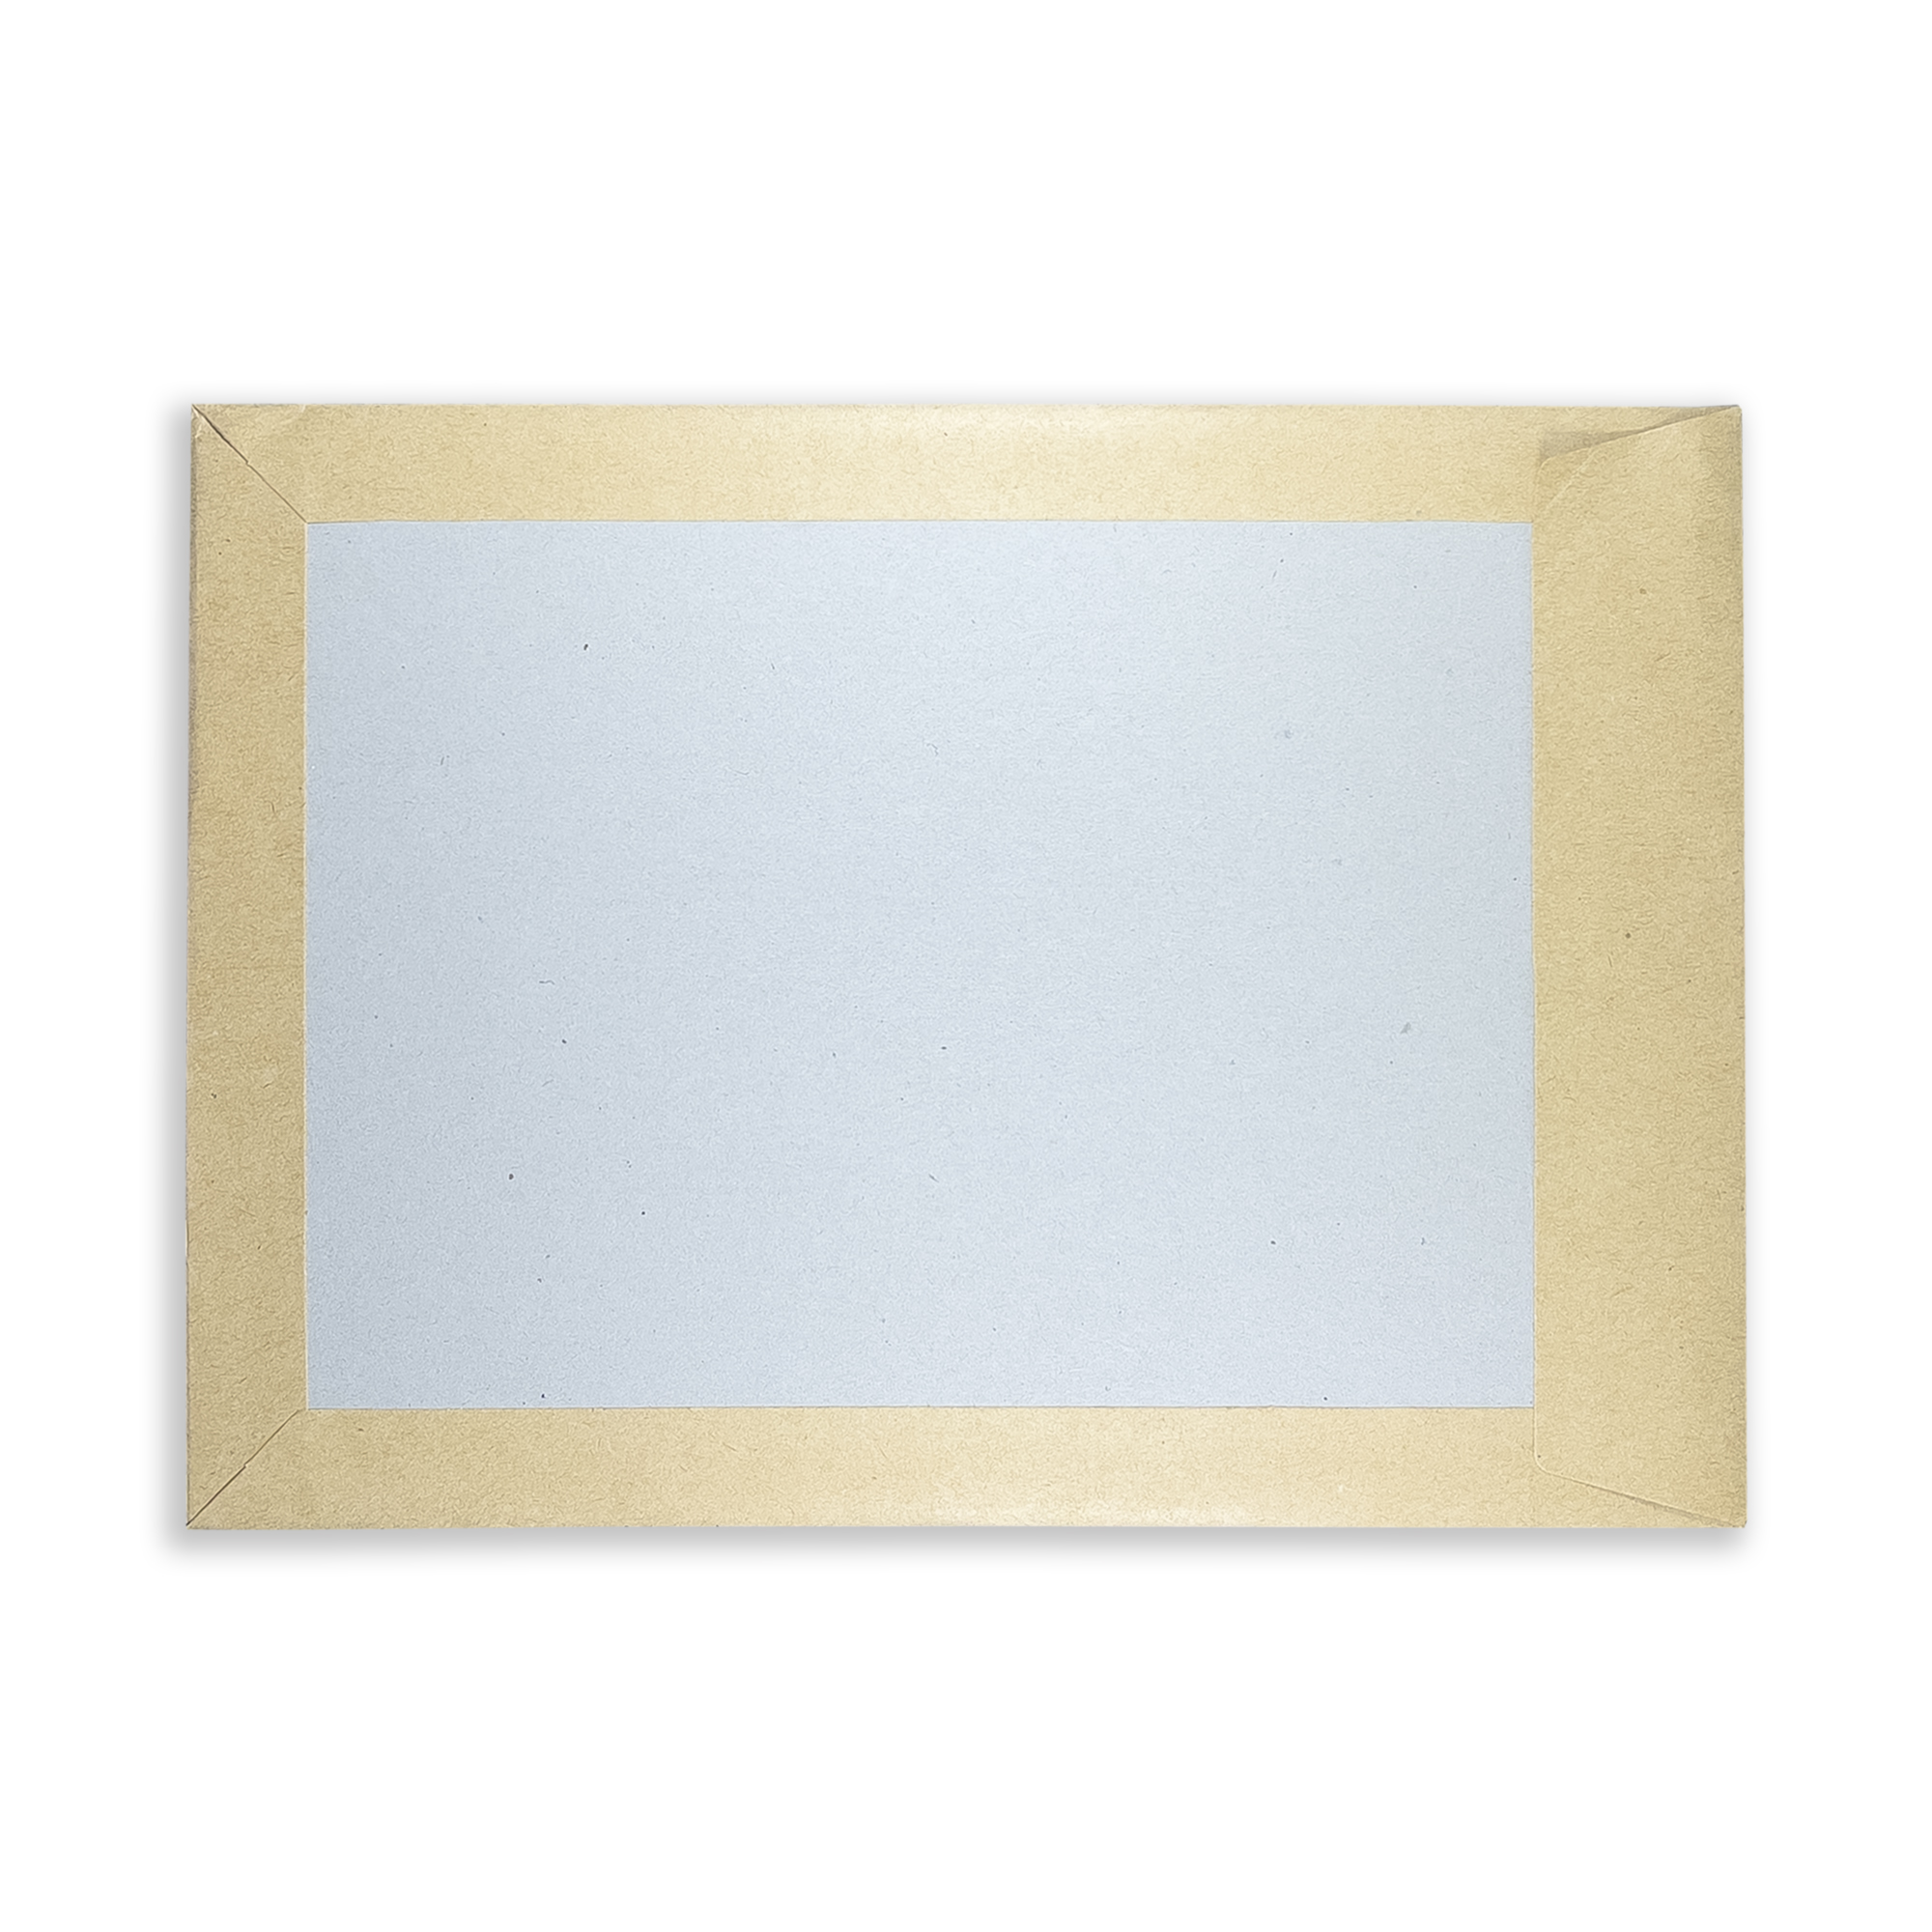 rectangle-manilla-board-back-window-pocket-envelopes-flap-closed